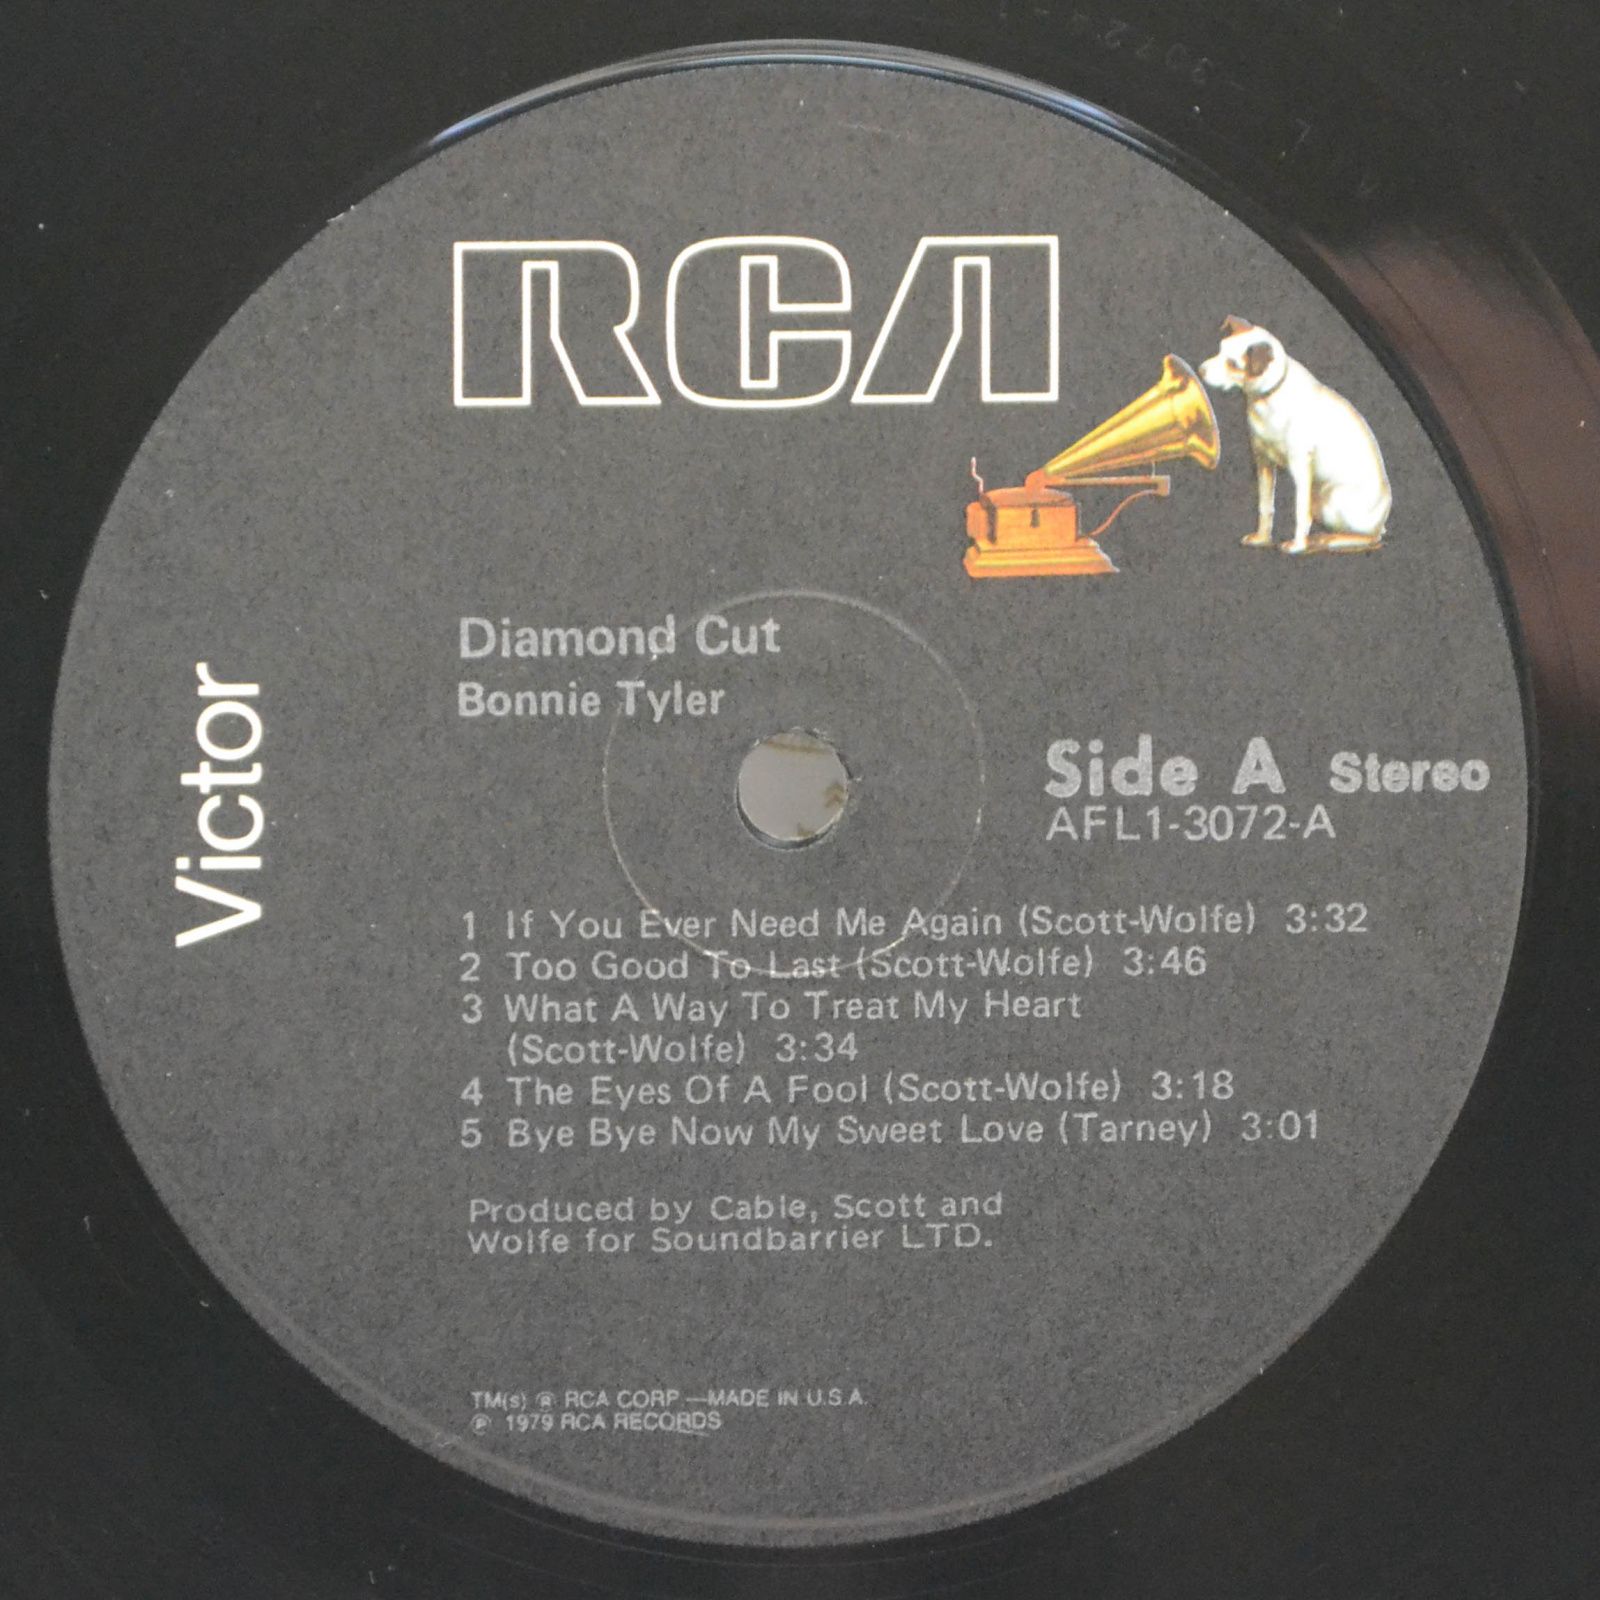 Bonnie Tyler — Diamond Cut (USA), 1979